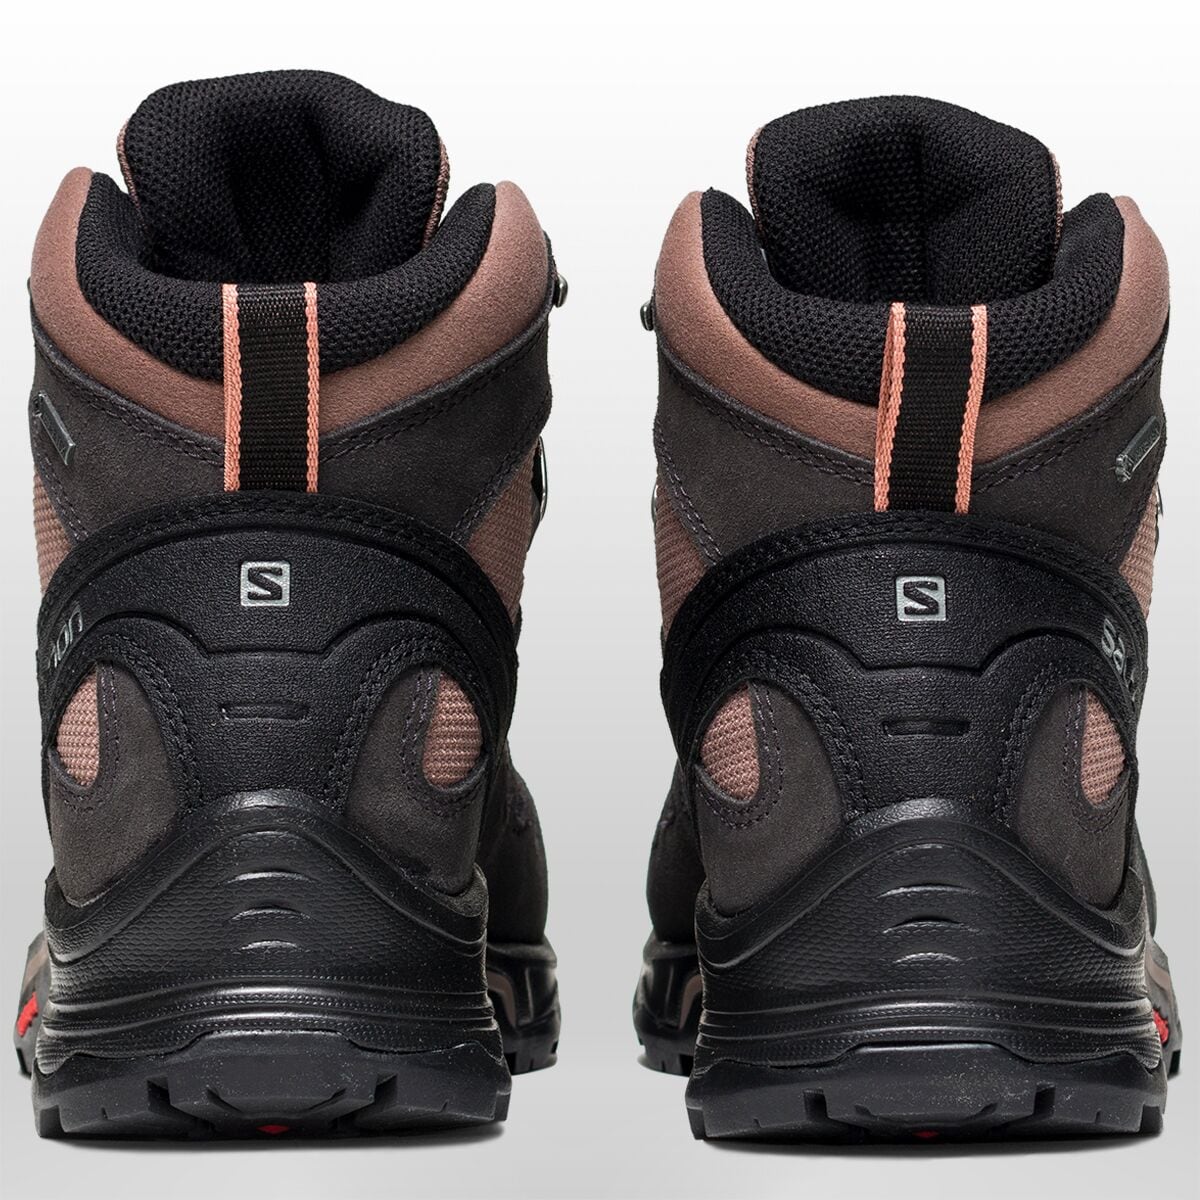 Salomon Quest GTX Backpacking Boot - Women's - Footwear